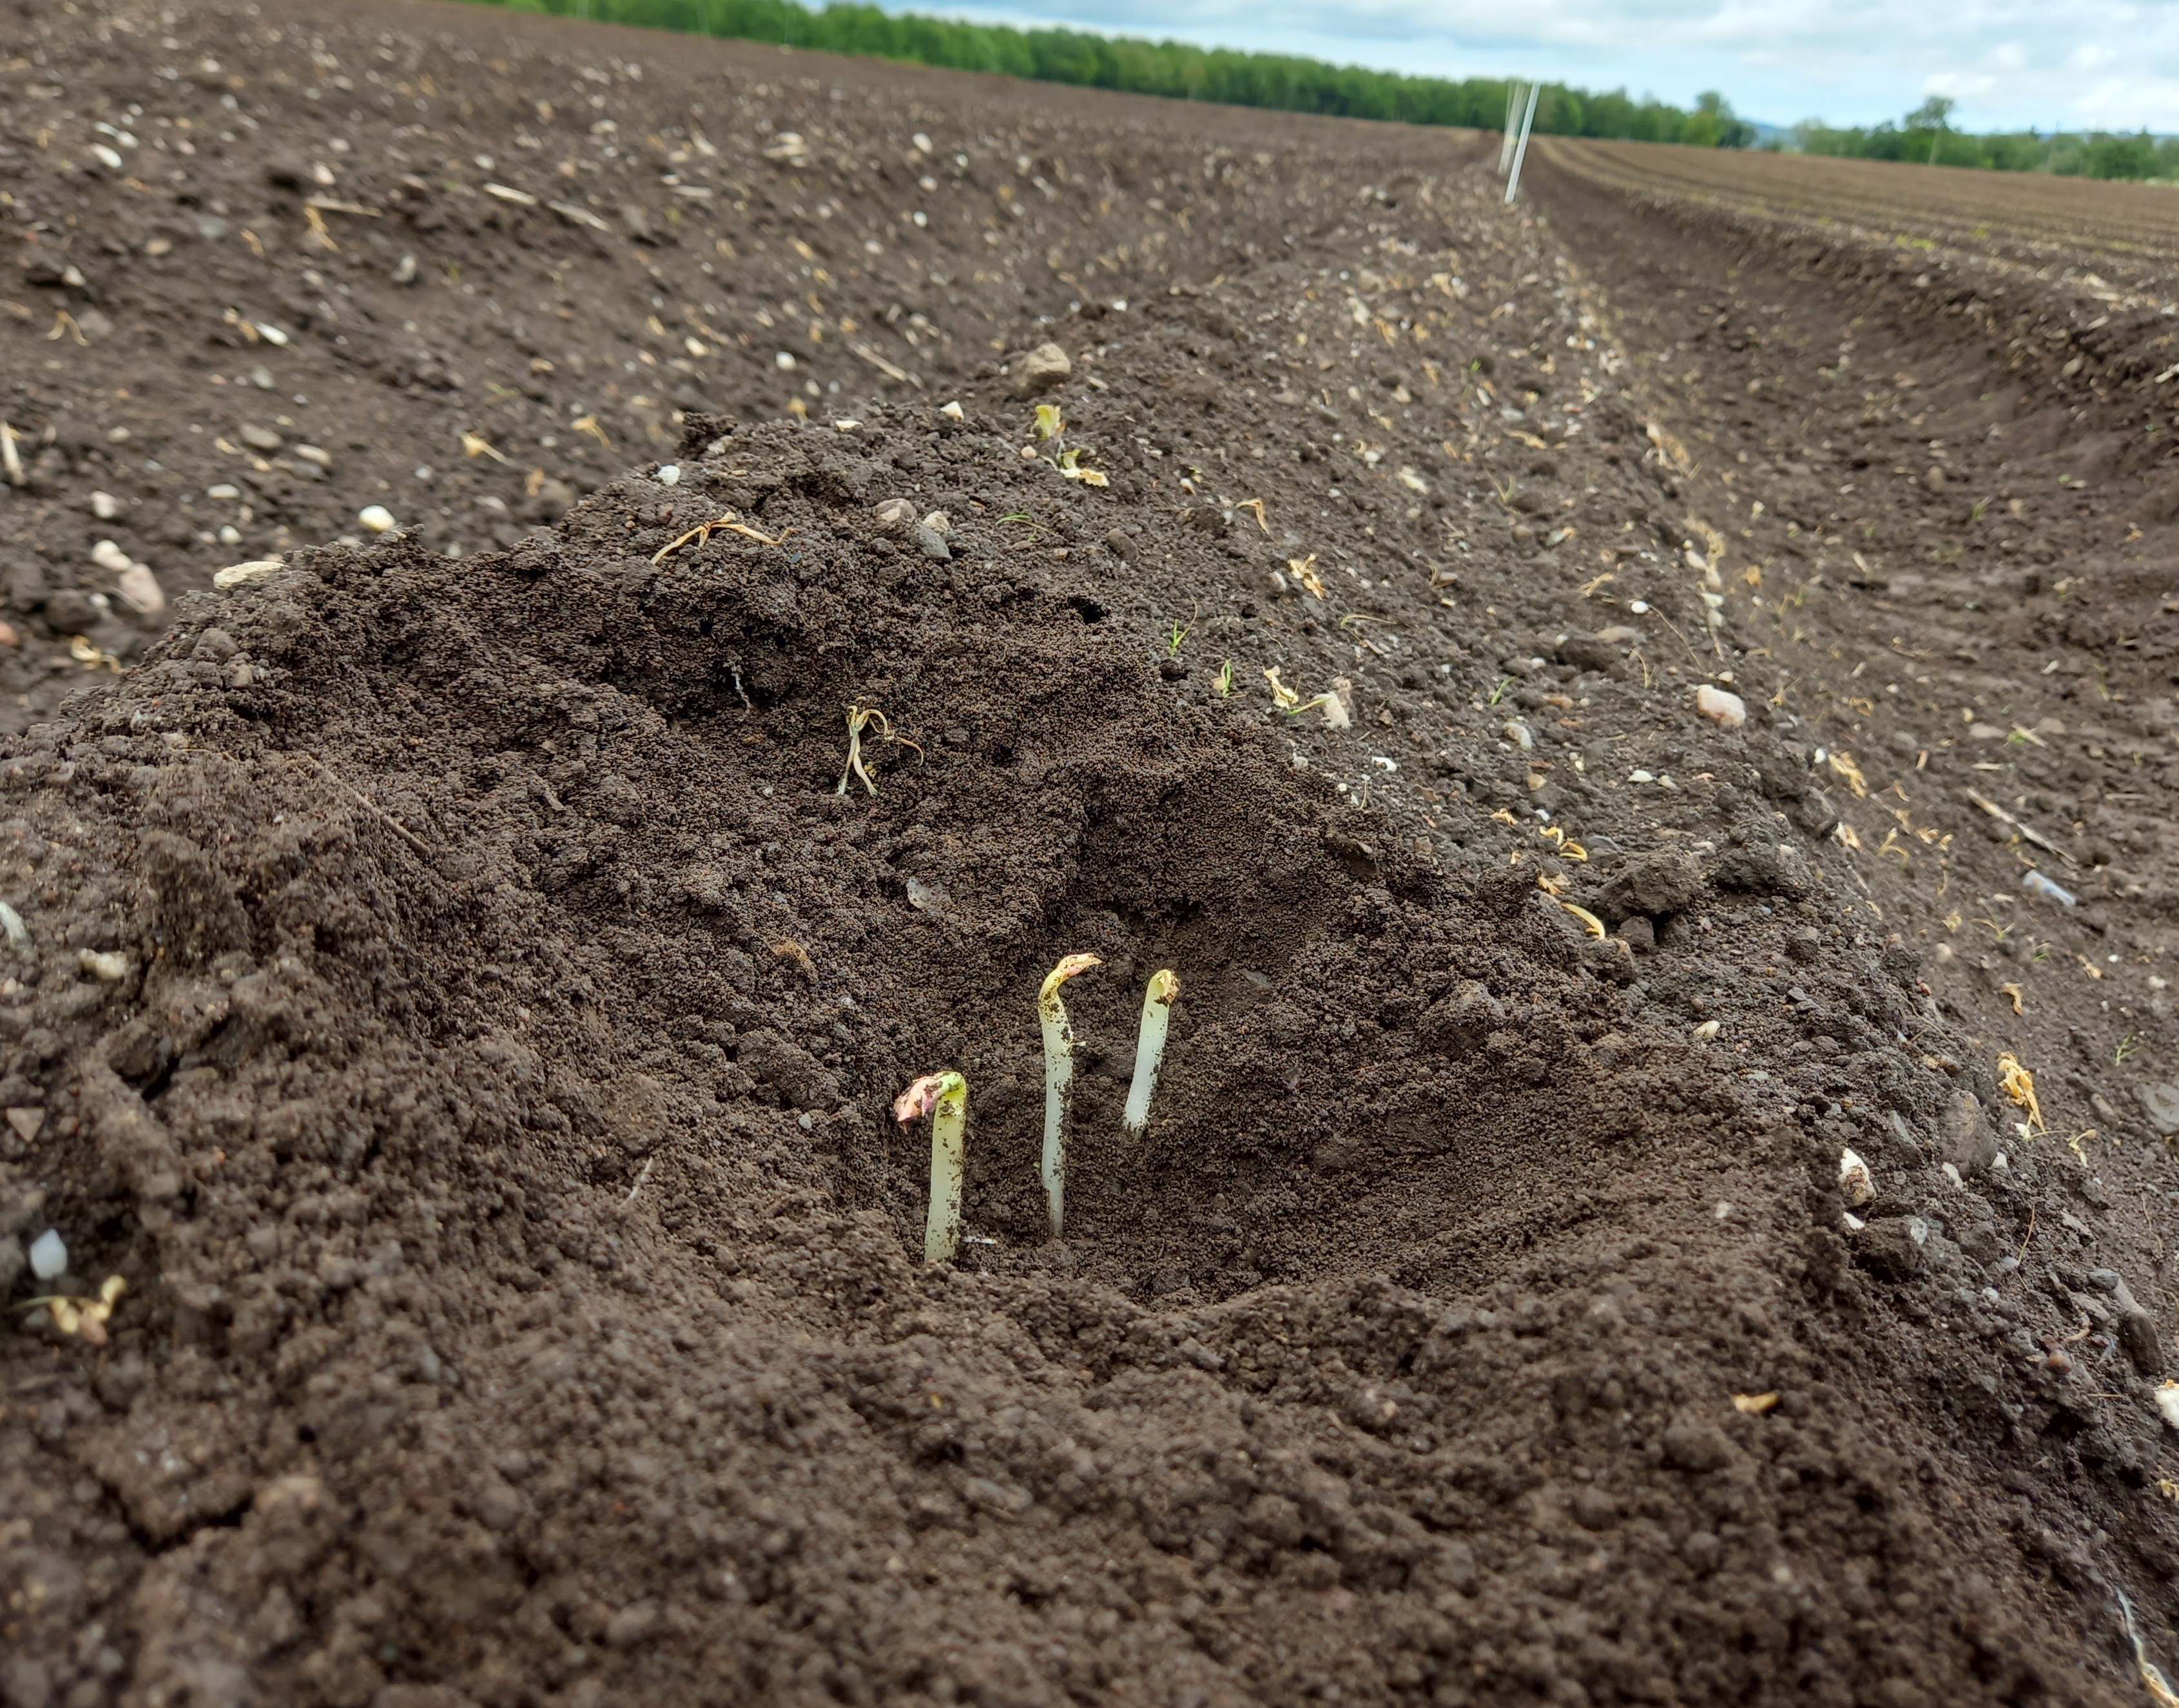 Potato sprouting in the soil